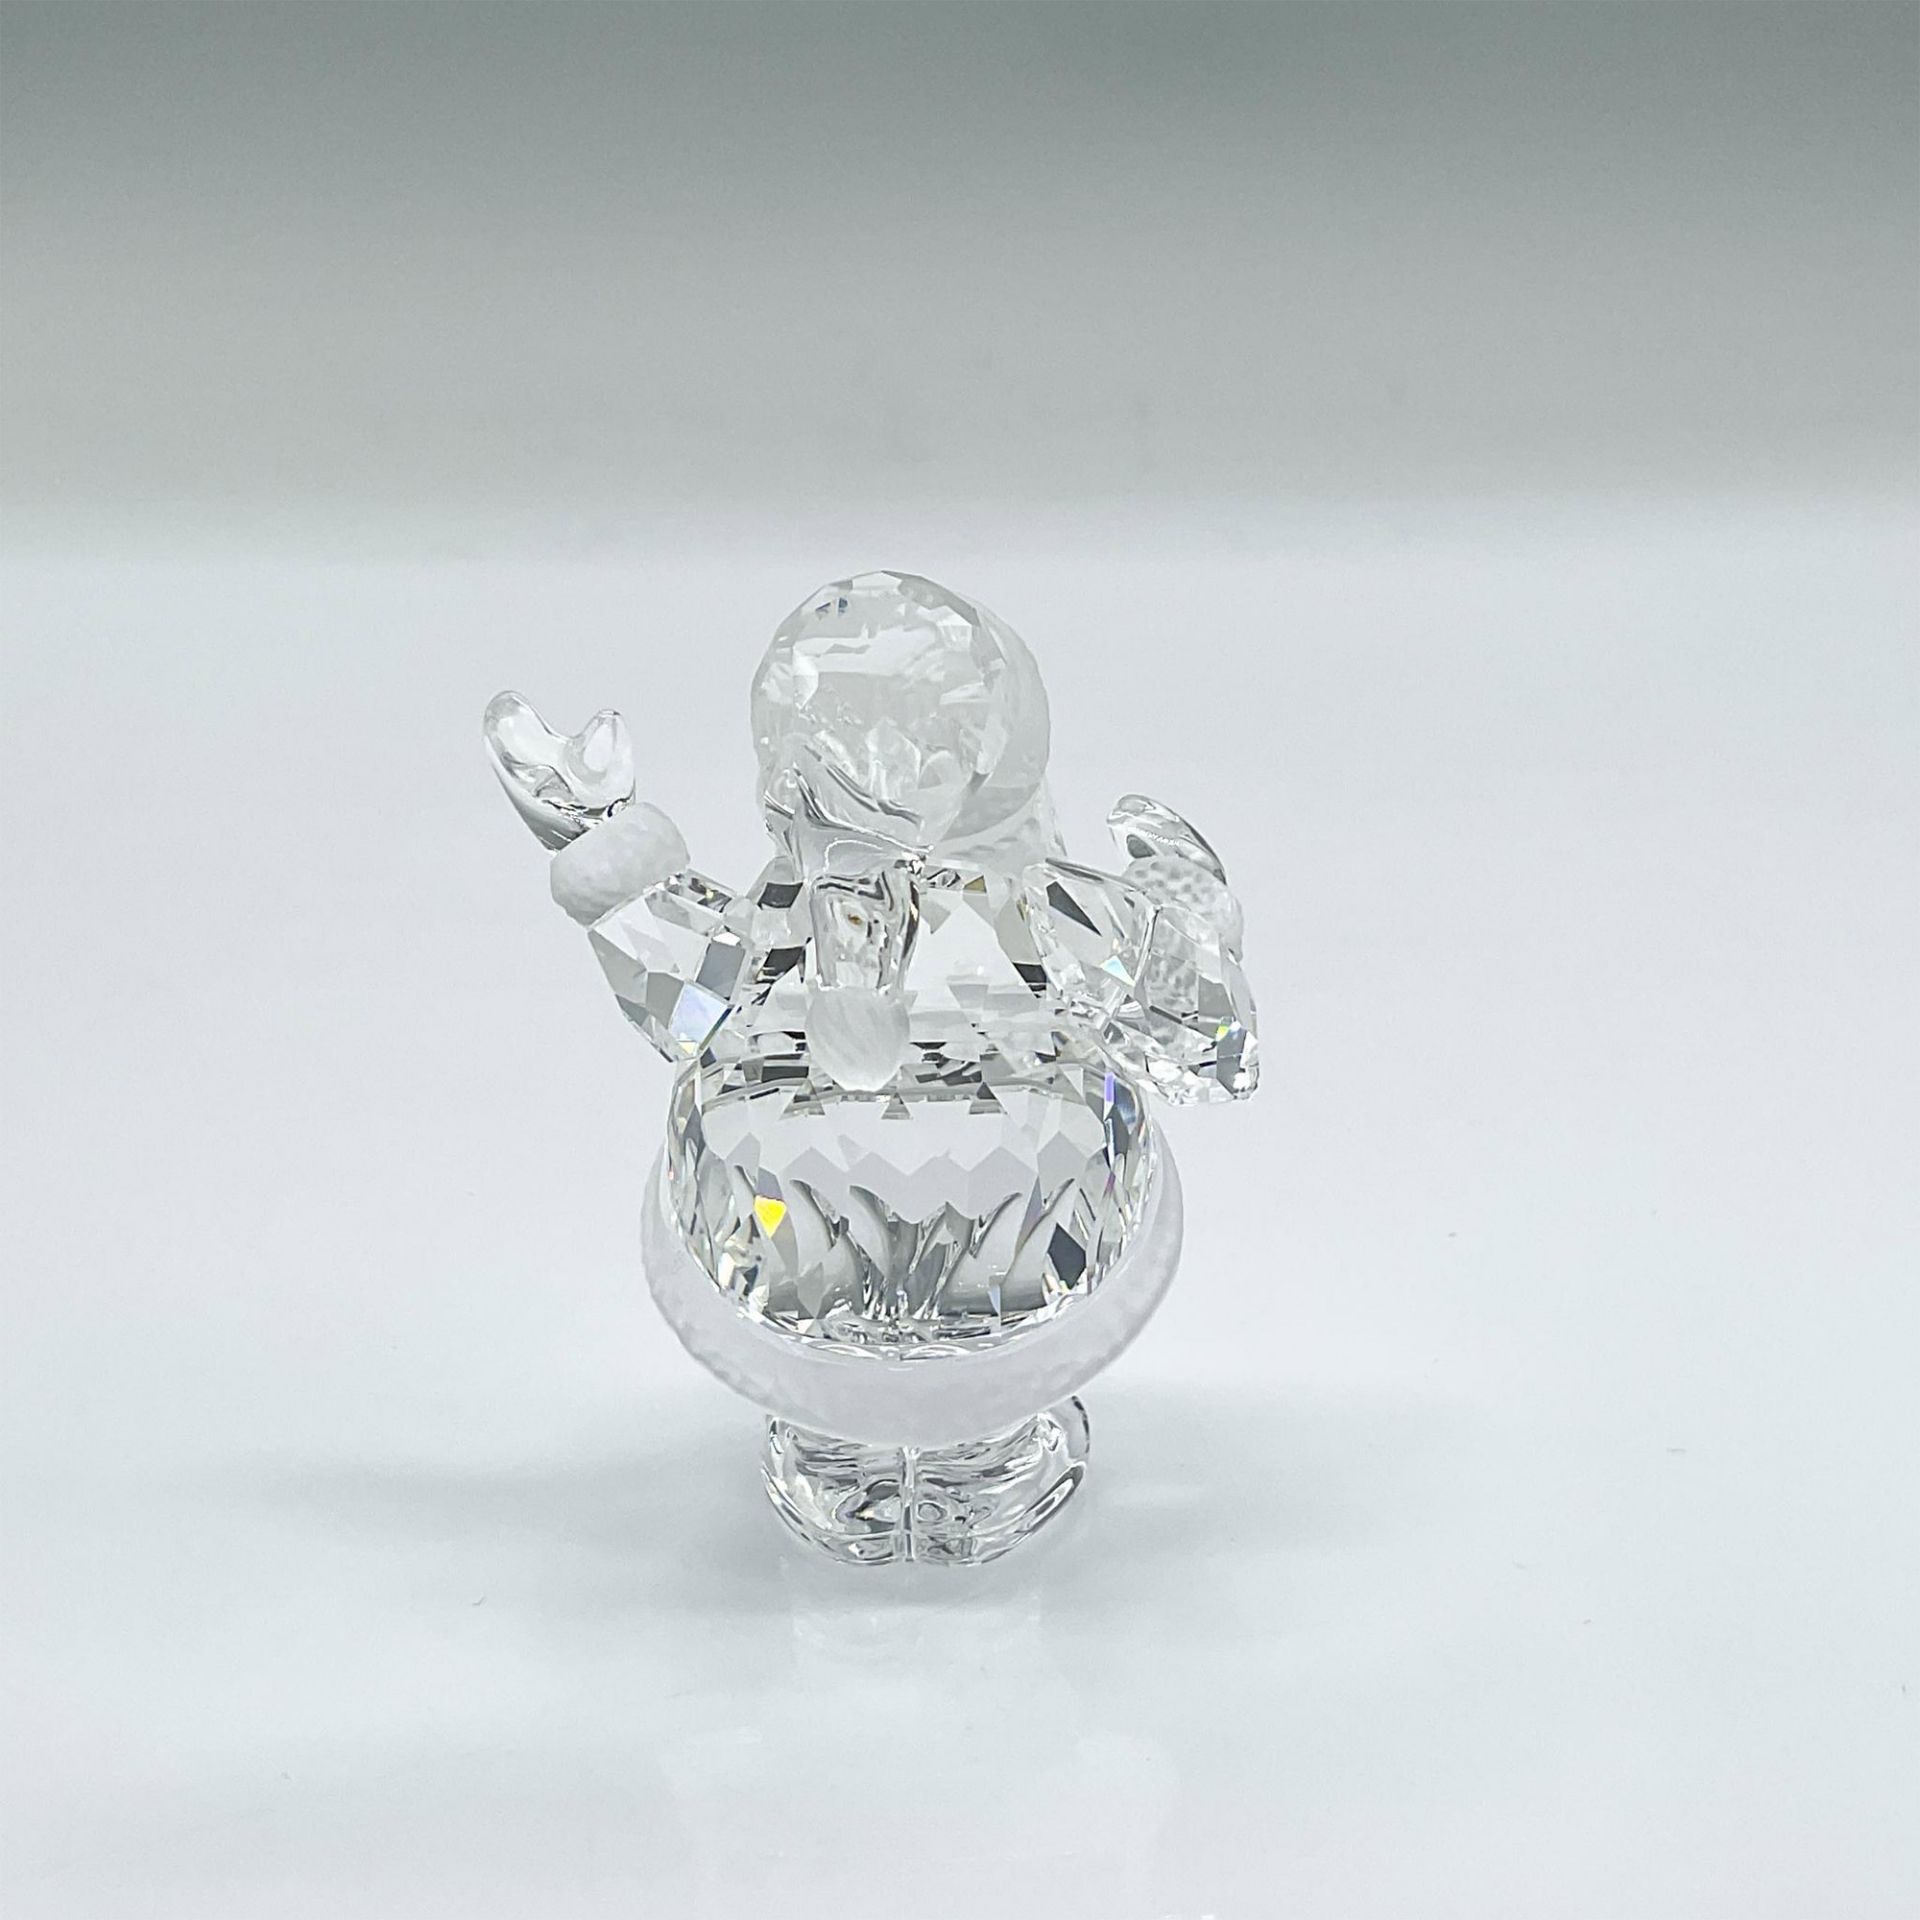 Swarovski Silver Crystal Figurine, Santa Claus - Image 2 of 4